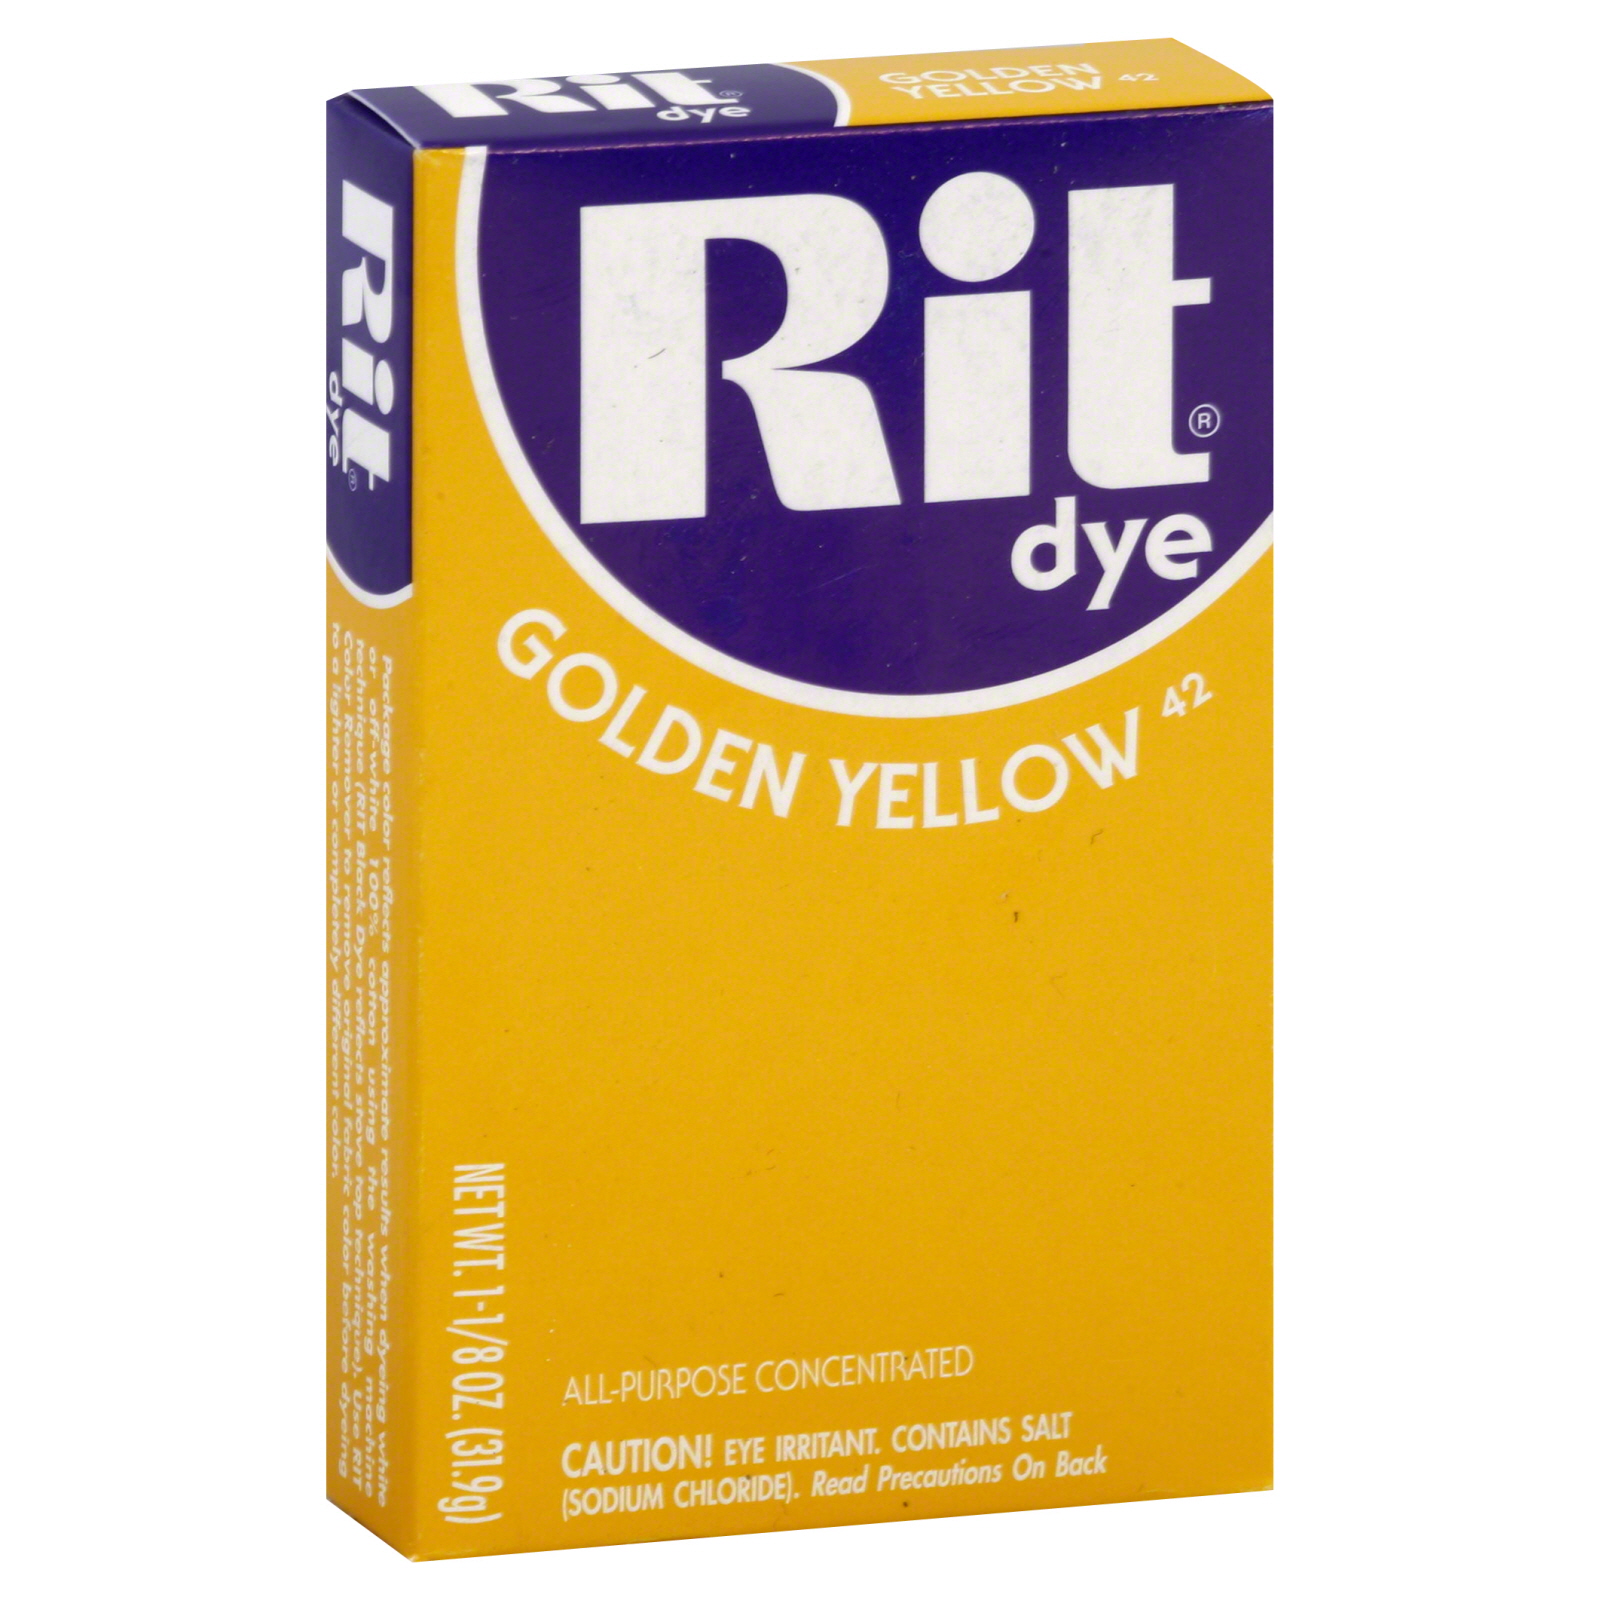 Rit Fabric Dye, Golden Yellow 42, 1.125 oz (31.9 g)